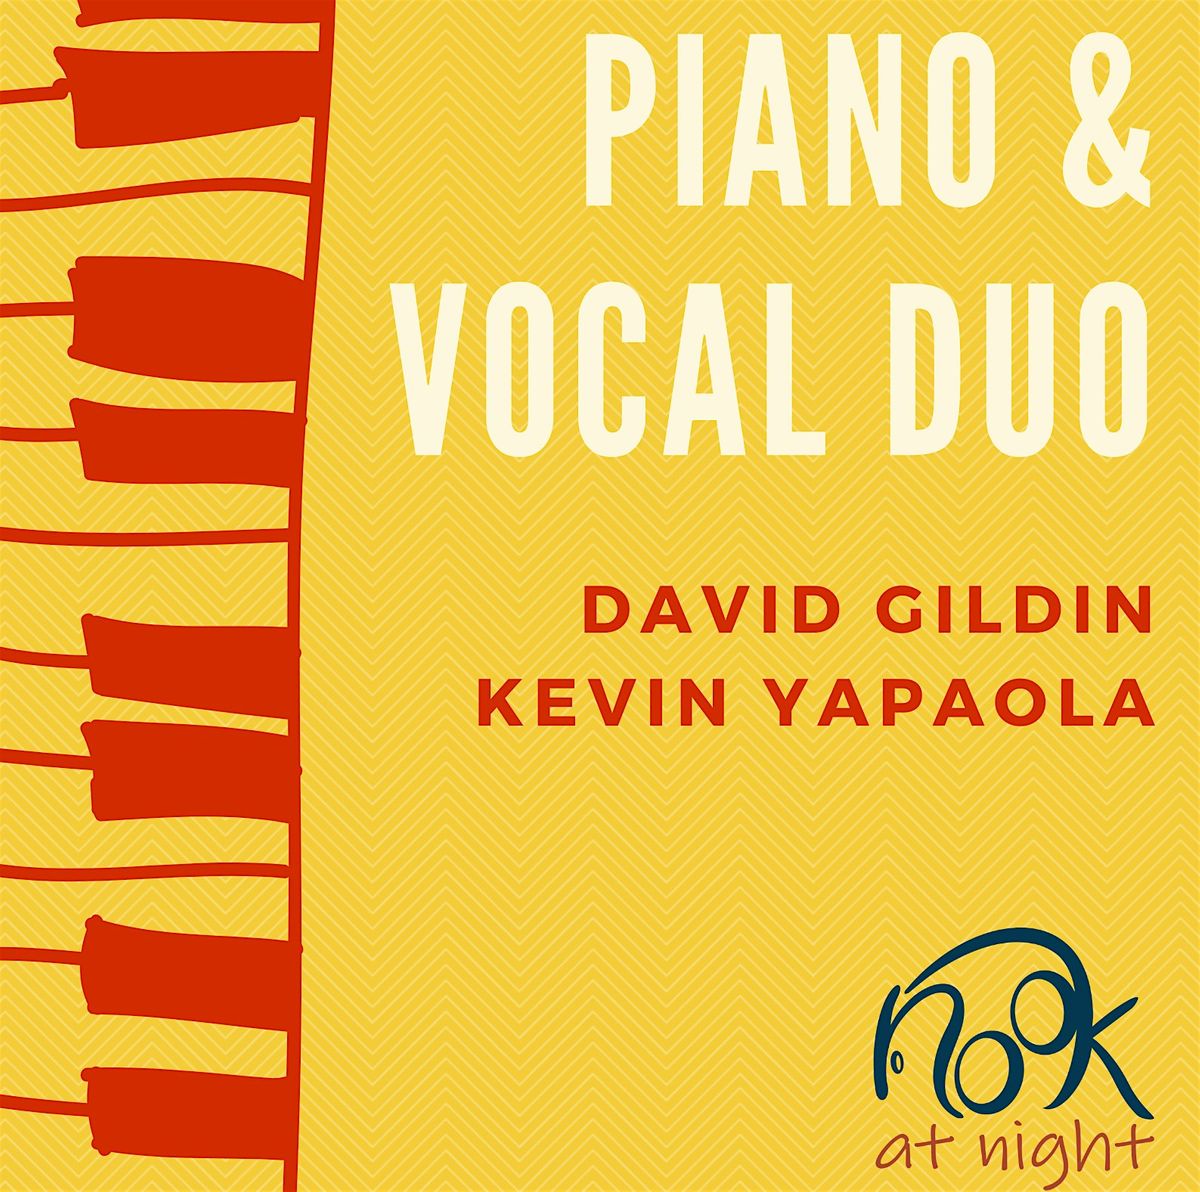 Piano & Vocal Duo